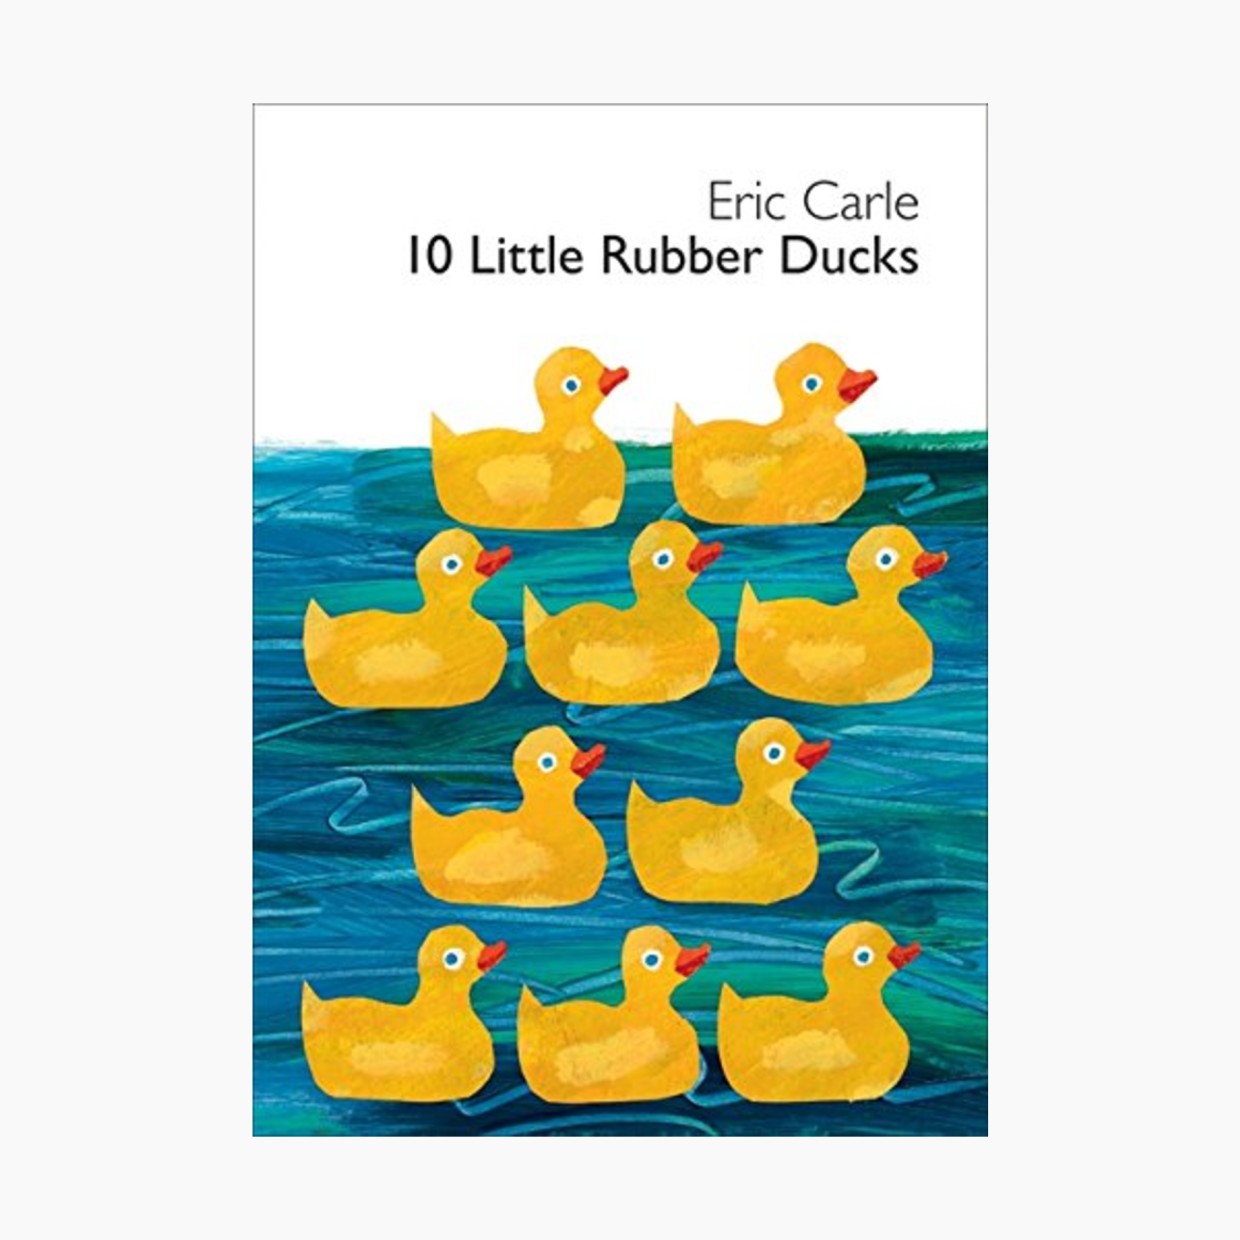 10 Little Rubber Ducks.